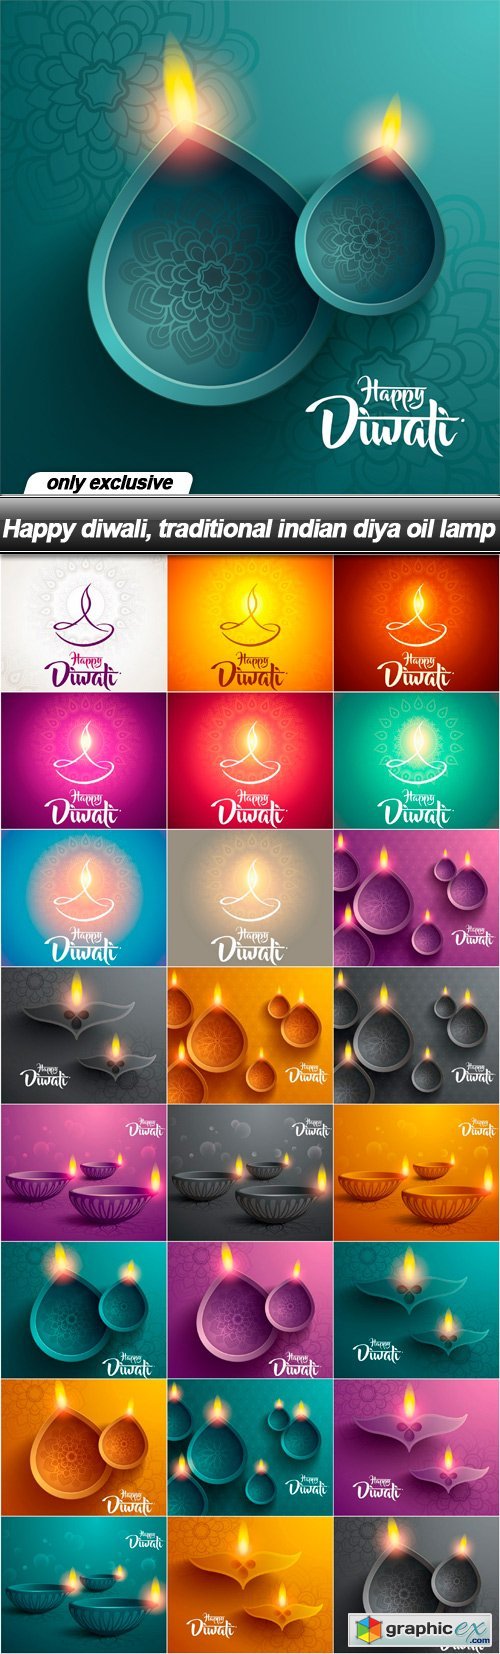 Happy diwali, traditional indian diya oil lamp - 24 EPS